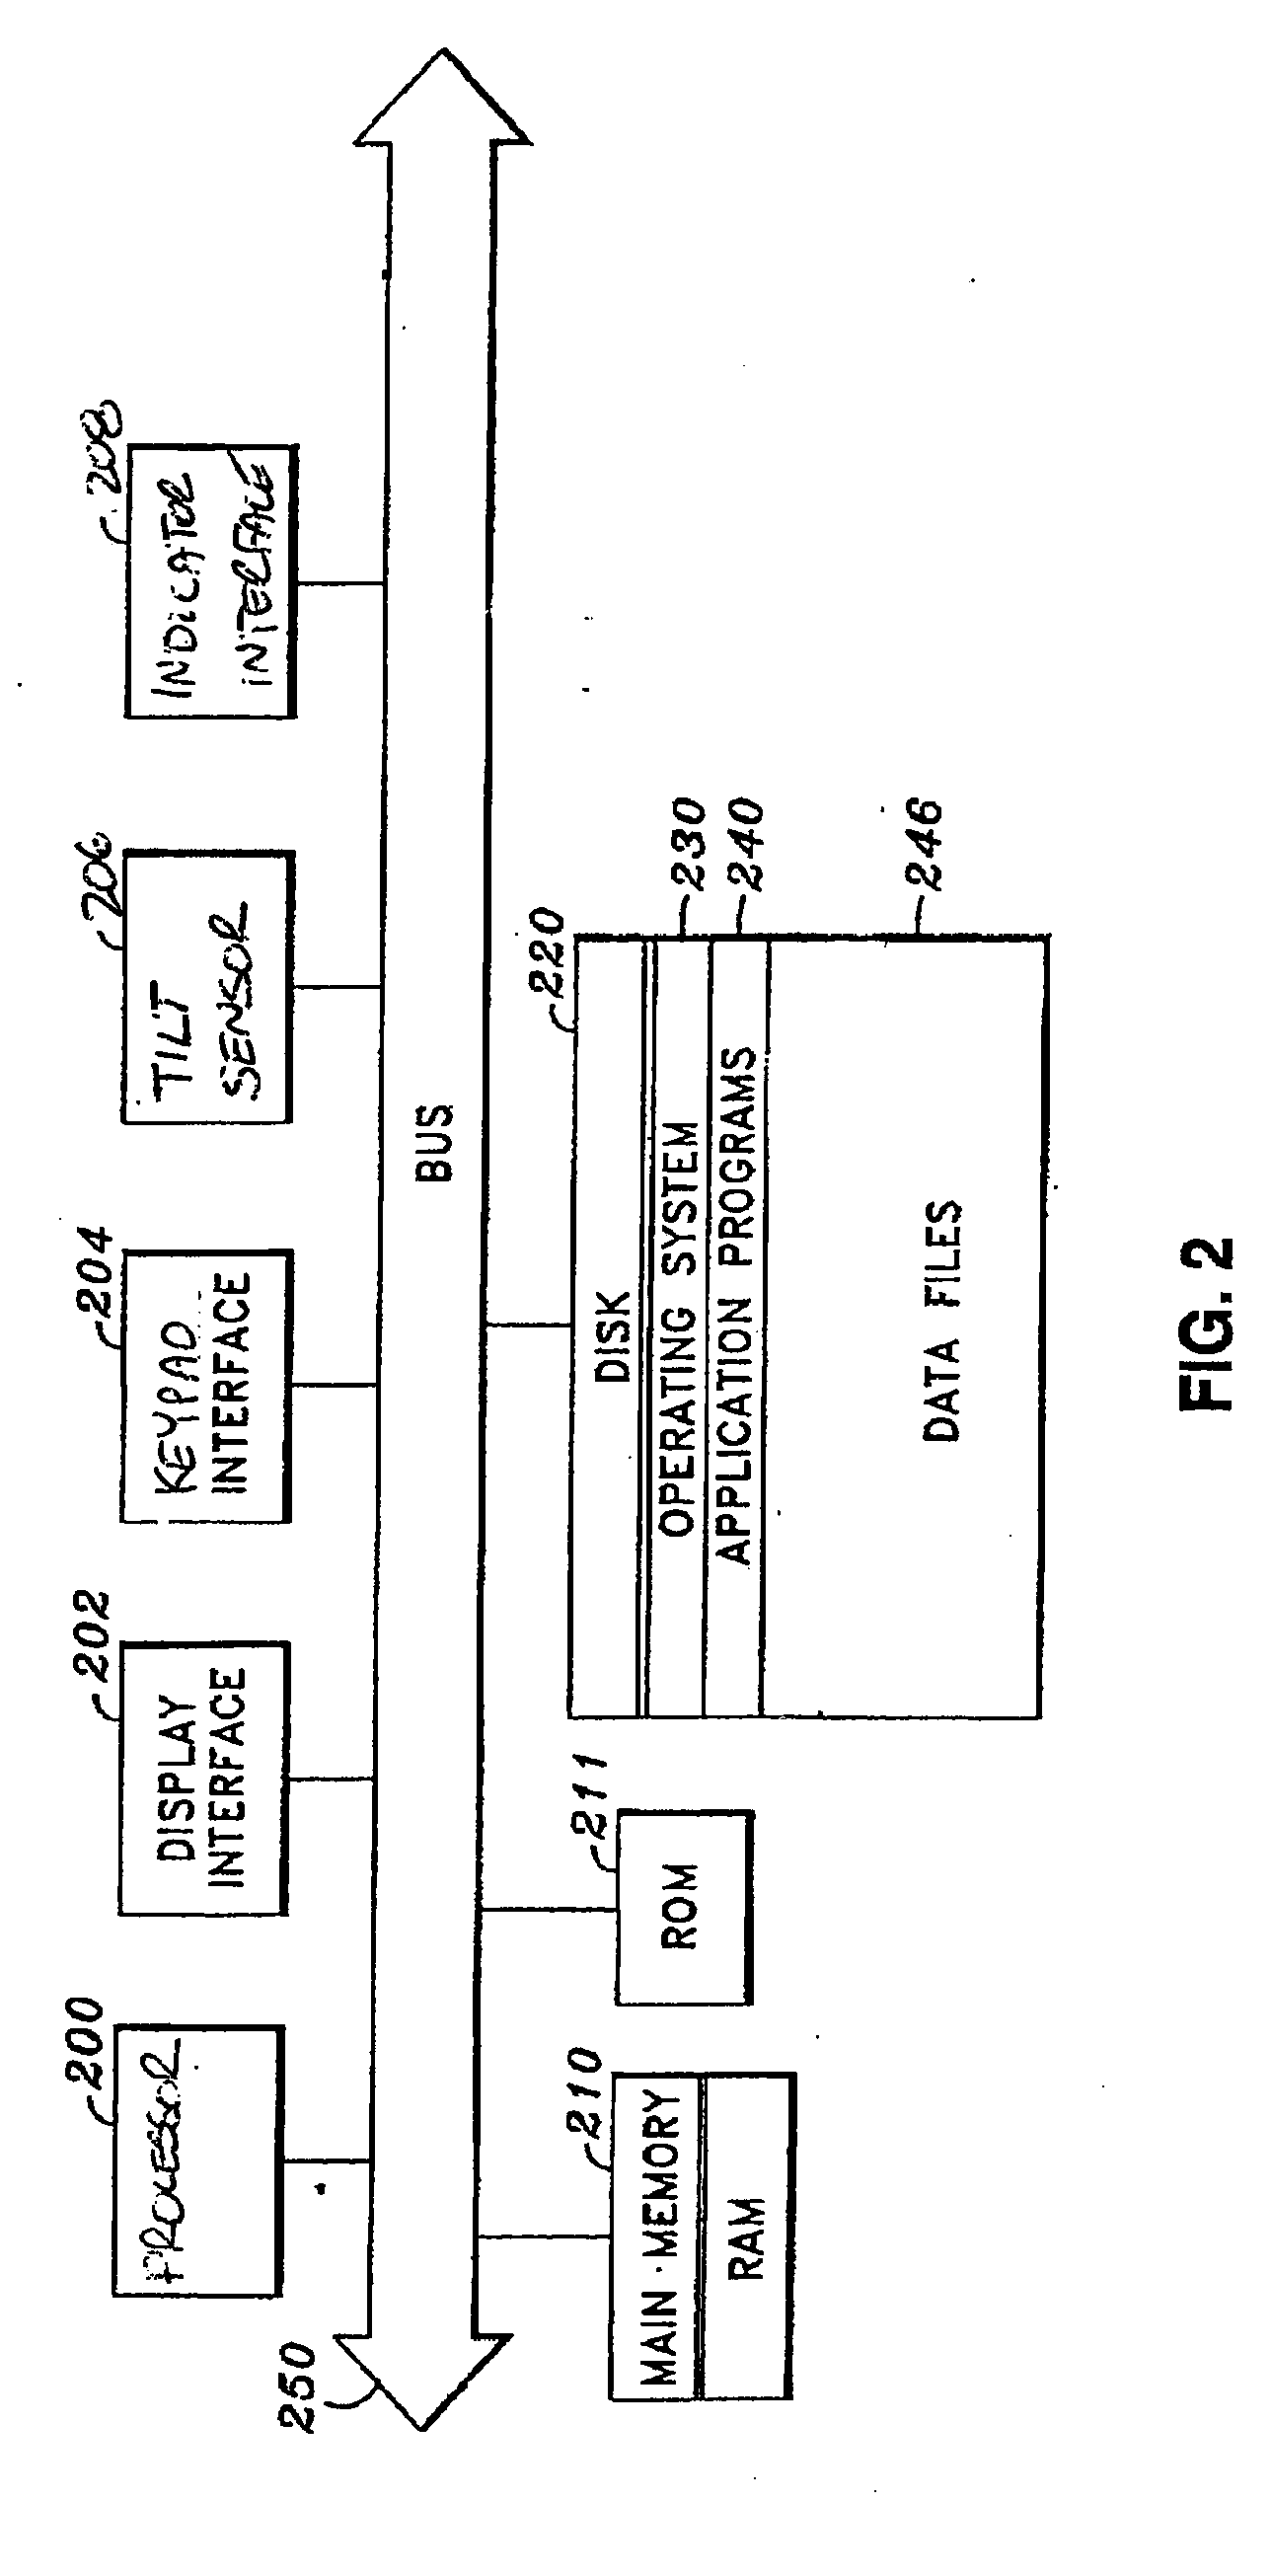 Orientation-sensitive signal output